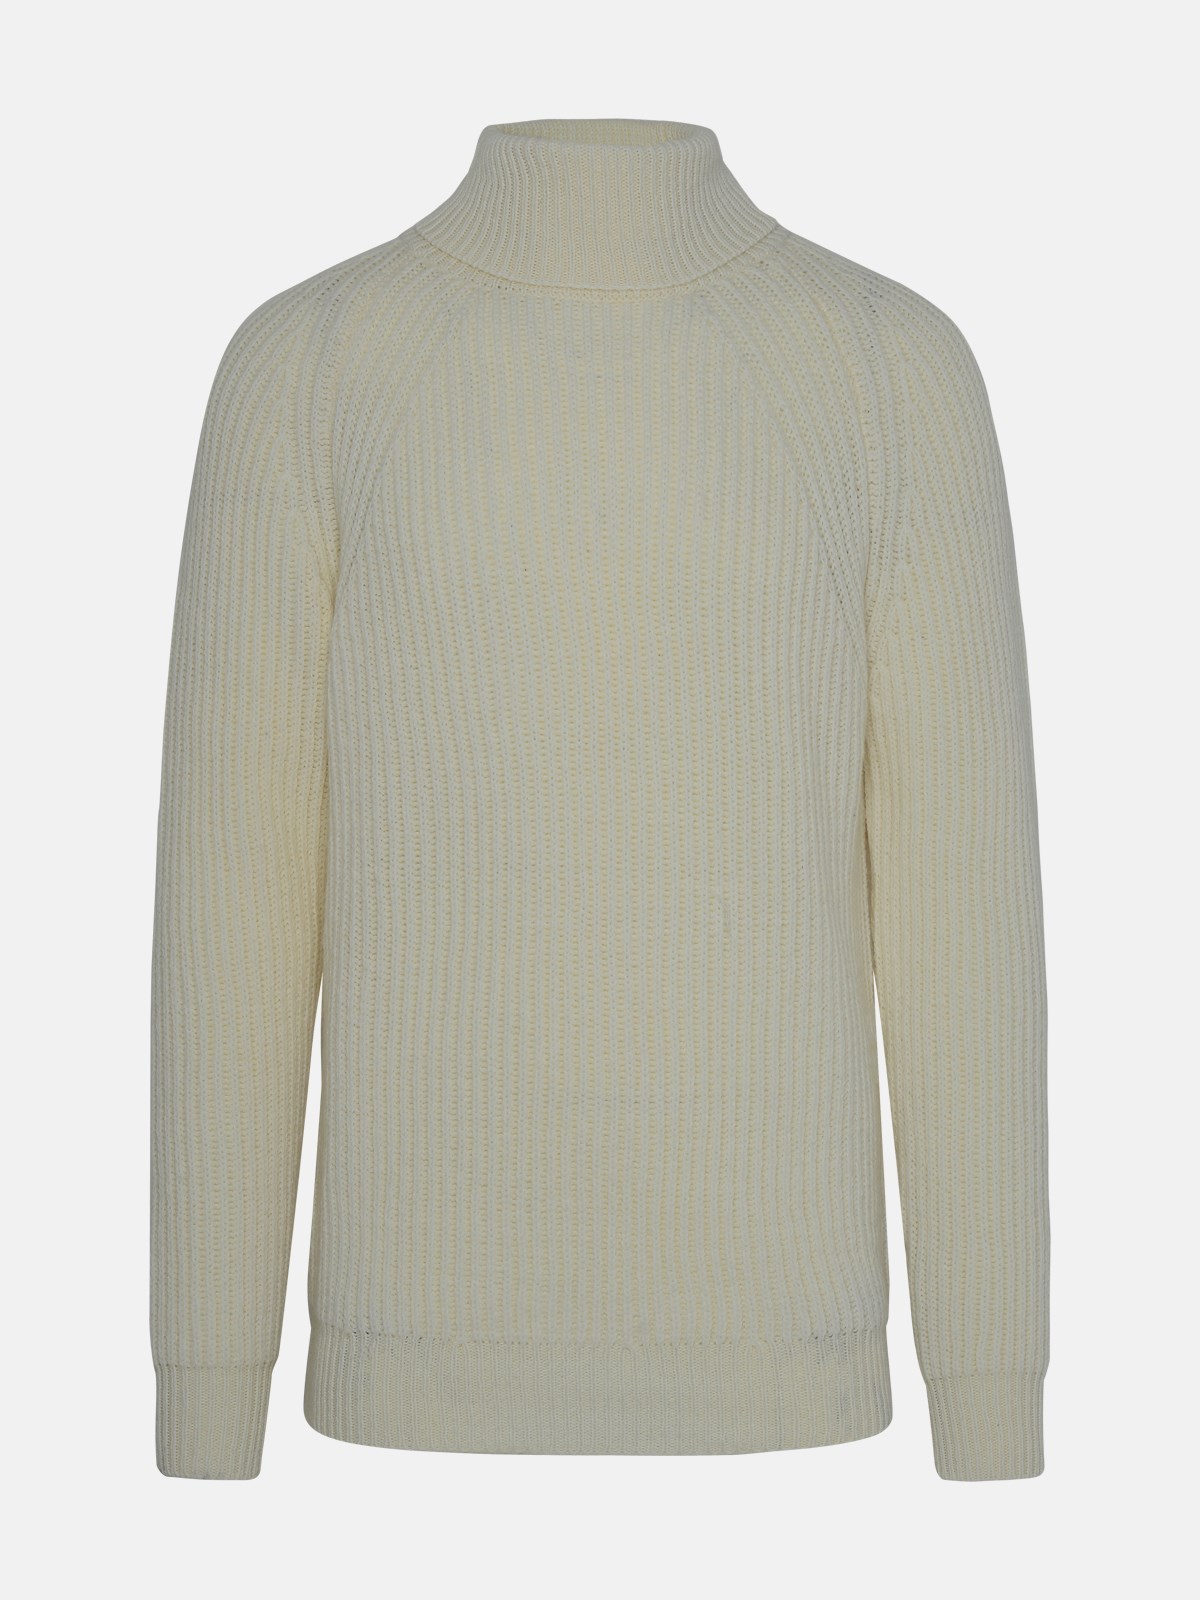 Shop Brian Dales White Wool Turtleneck Sweater